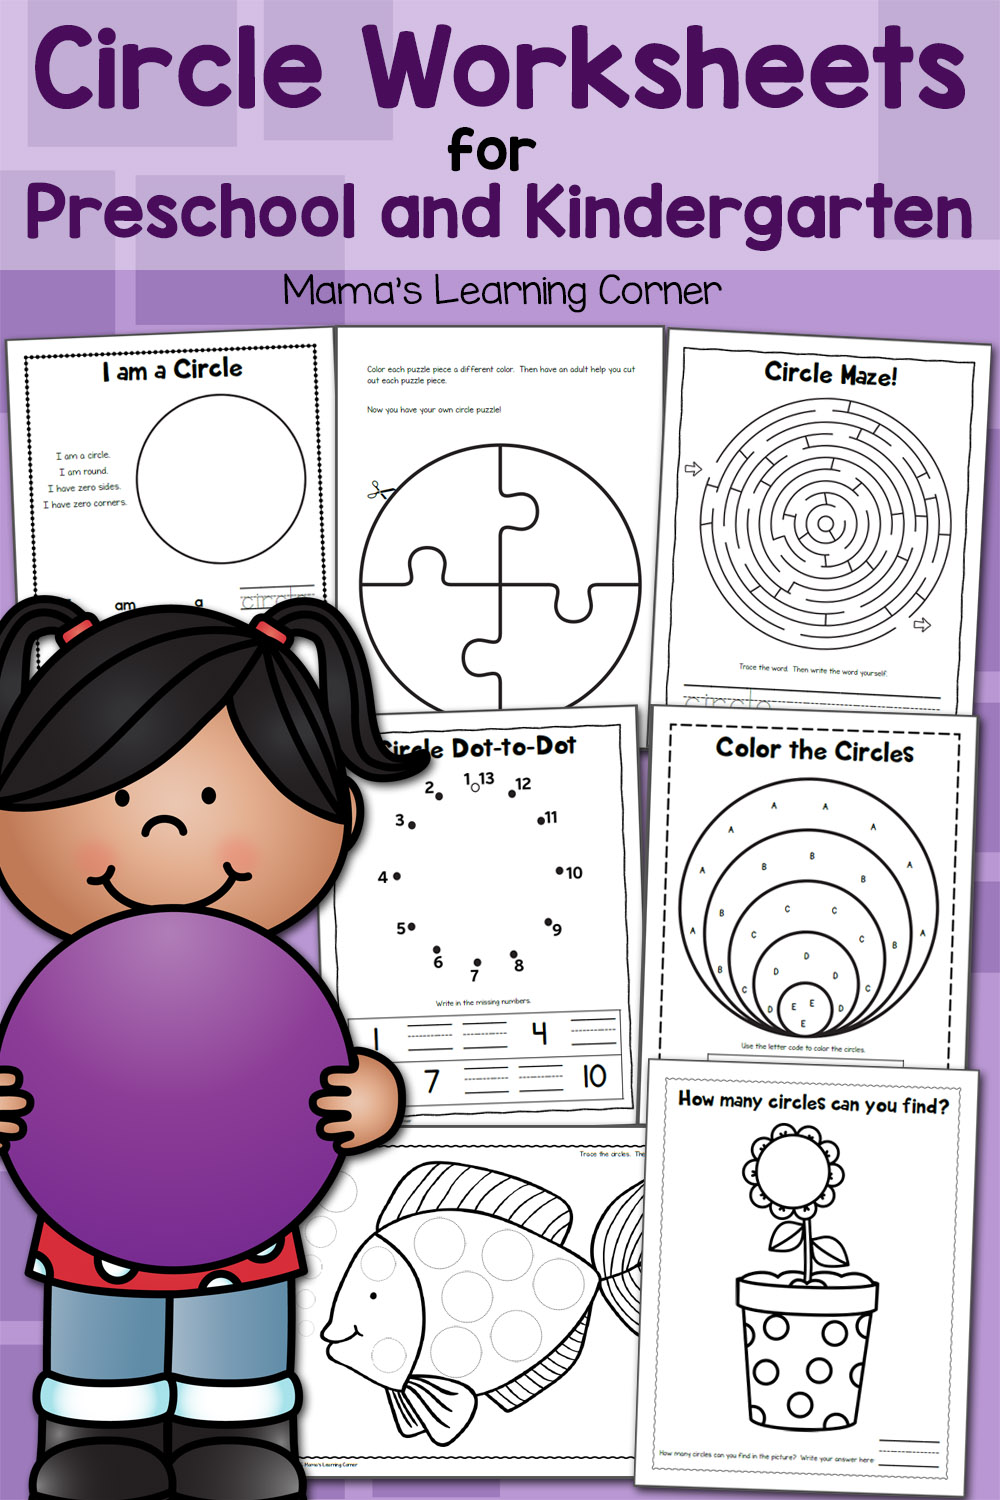 Circle Worksheets for Preschool and Kindergarten - Mamas Learning Corner